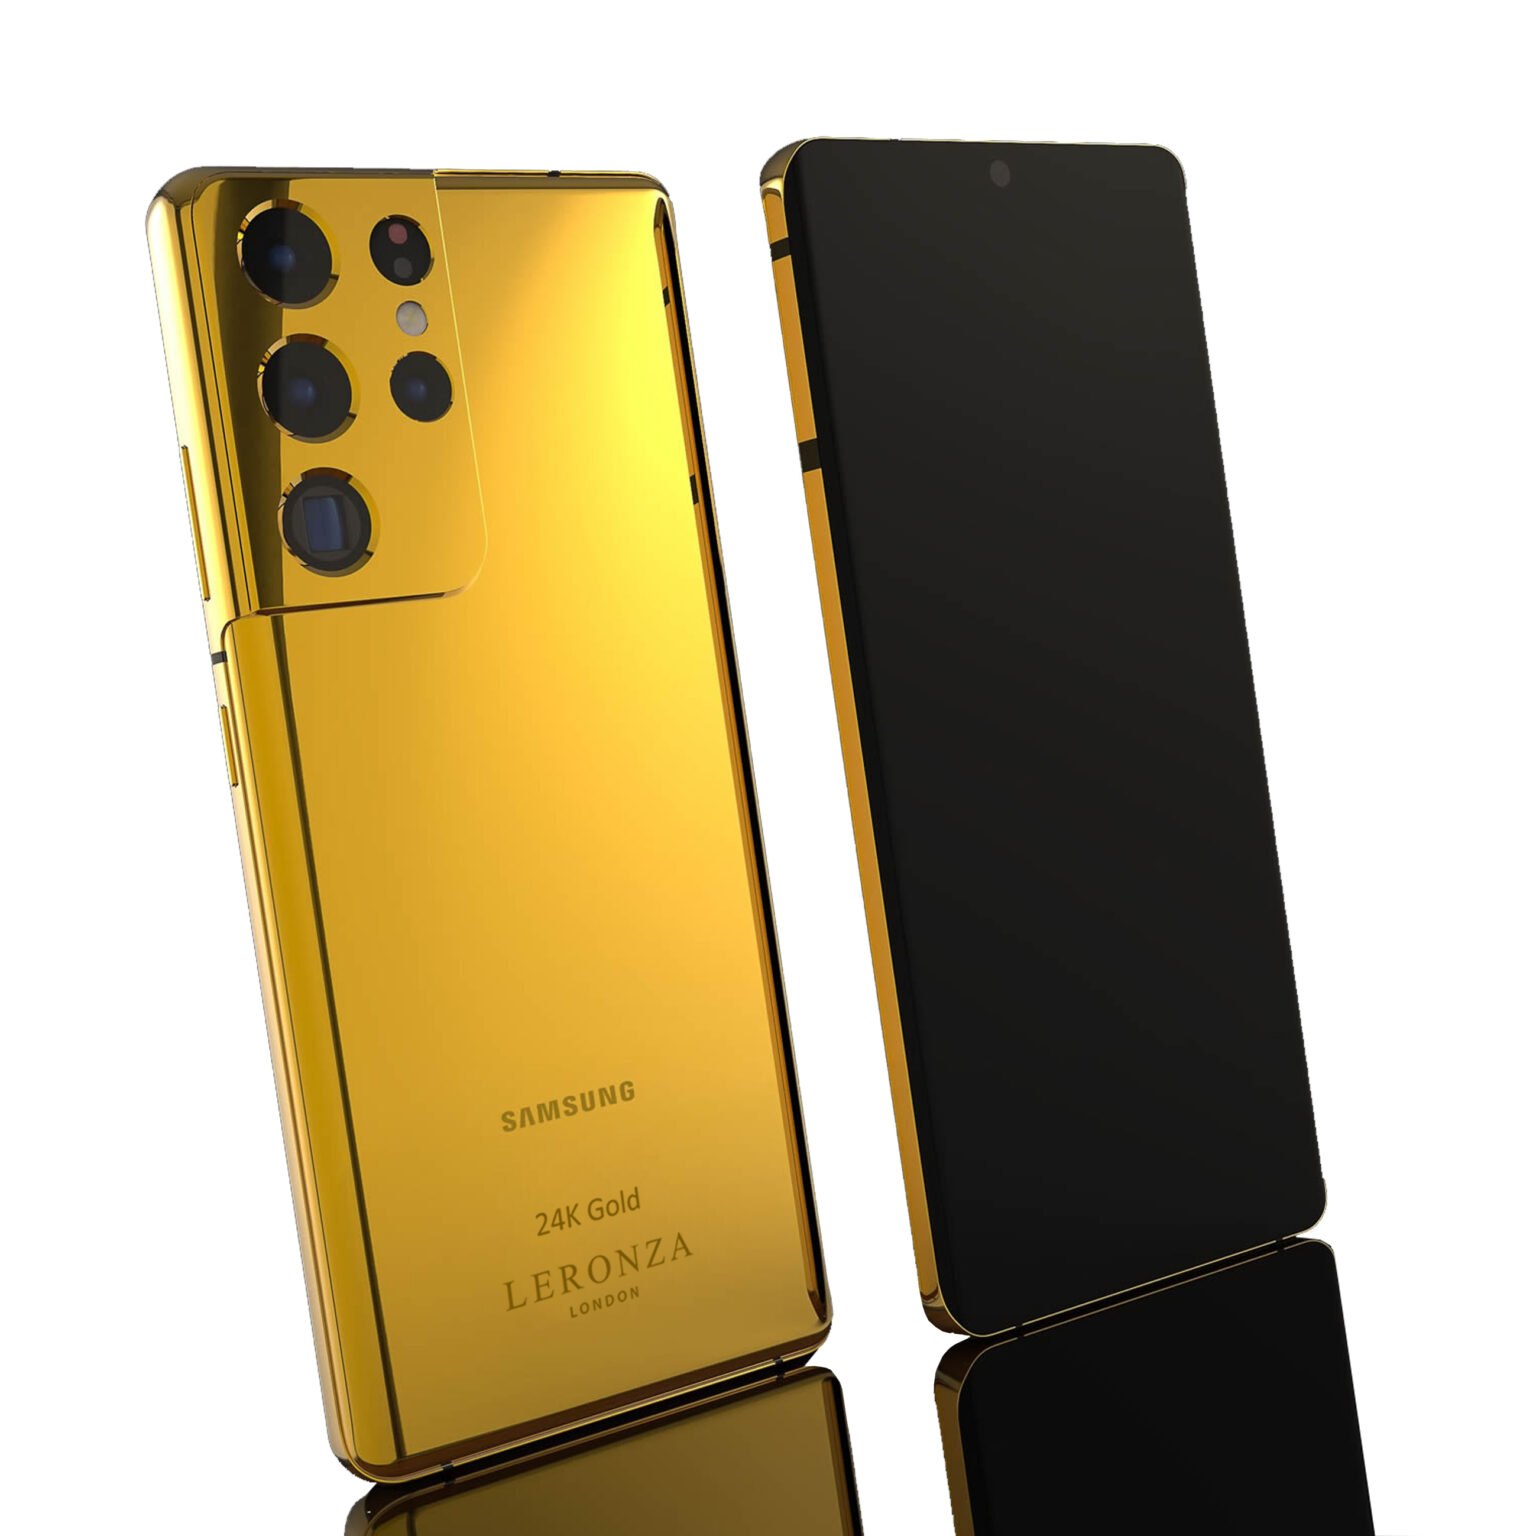 24k Gold Samsung Galaxy S21 Ultra (5G) Elite - Leronza